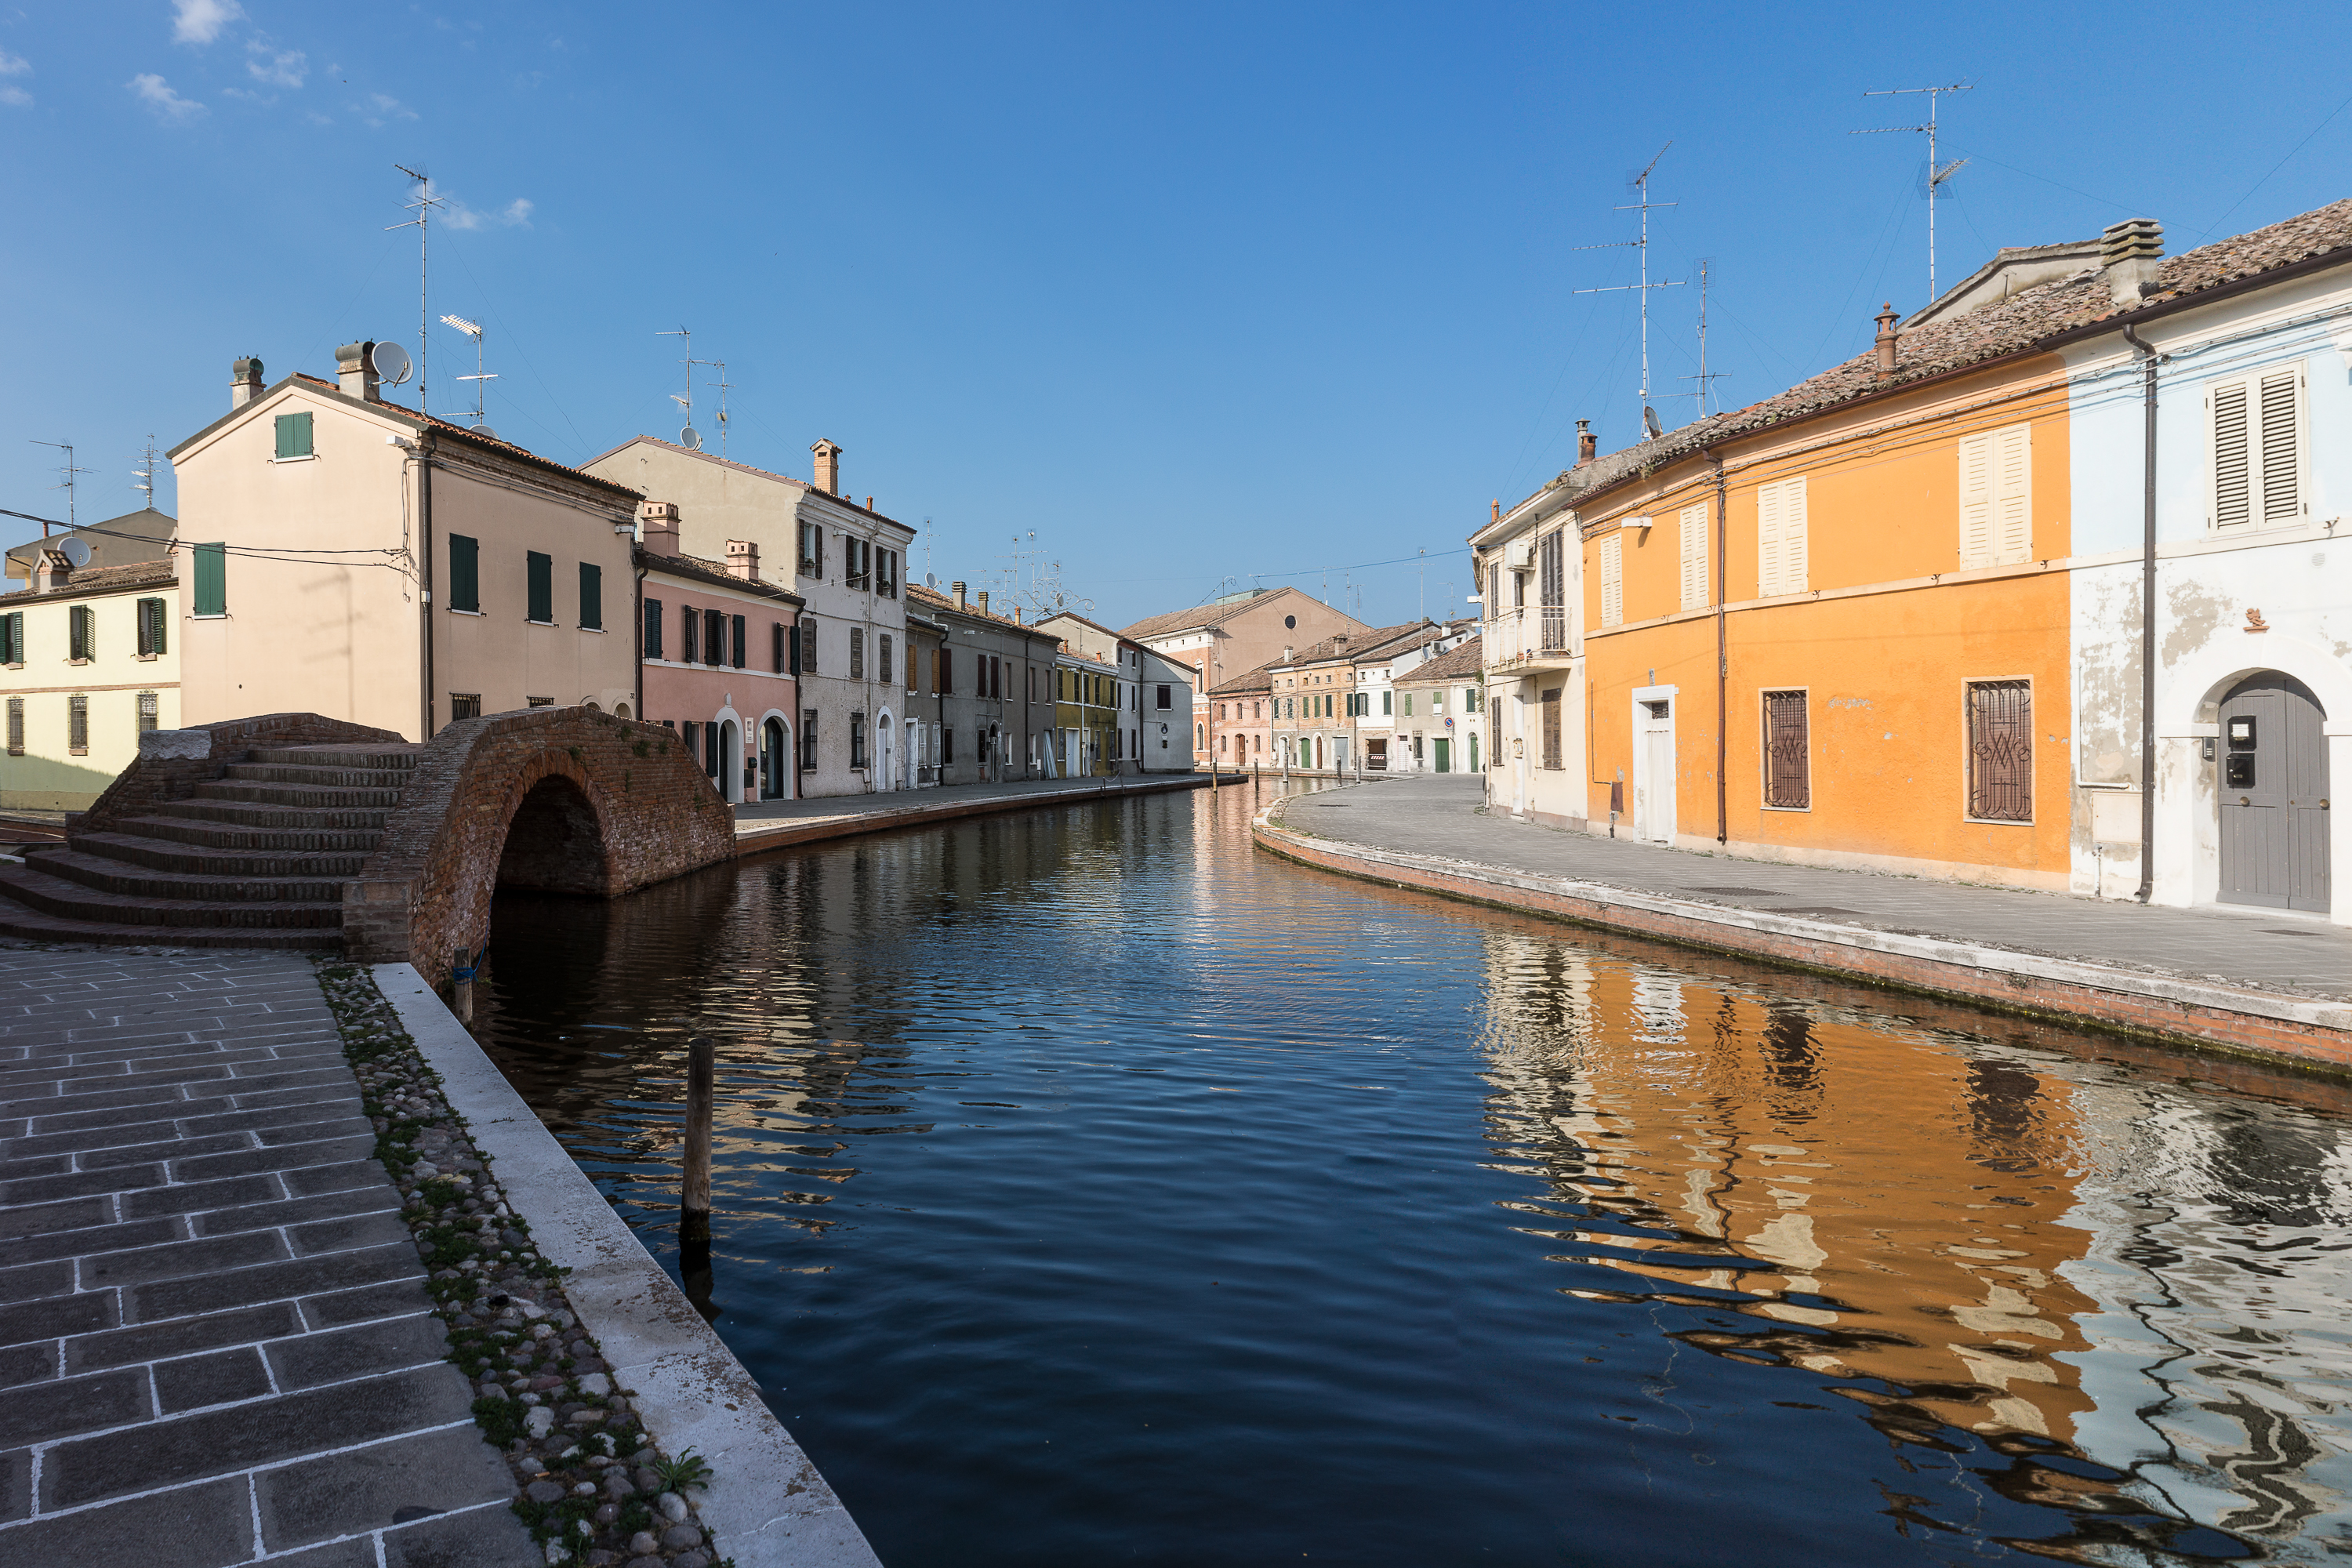 foto: https://upload.wikimedia.org/wikipedia/commons/7/75/Ponte_dei_Sisti_-_Comacchio.jpg